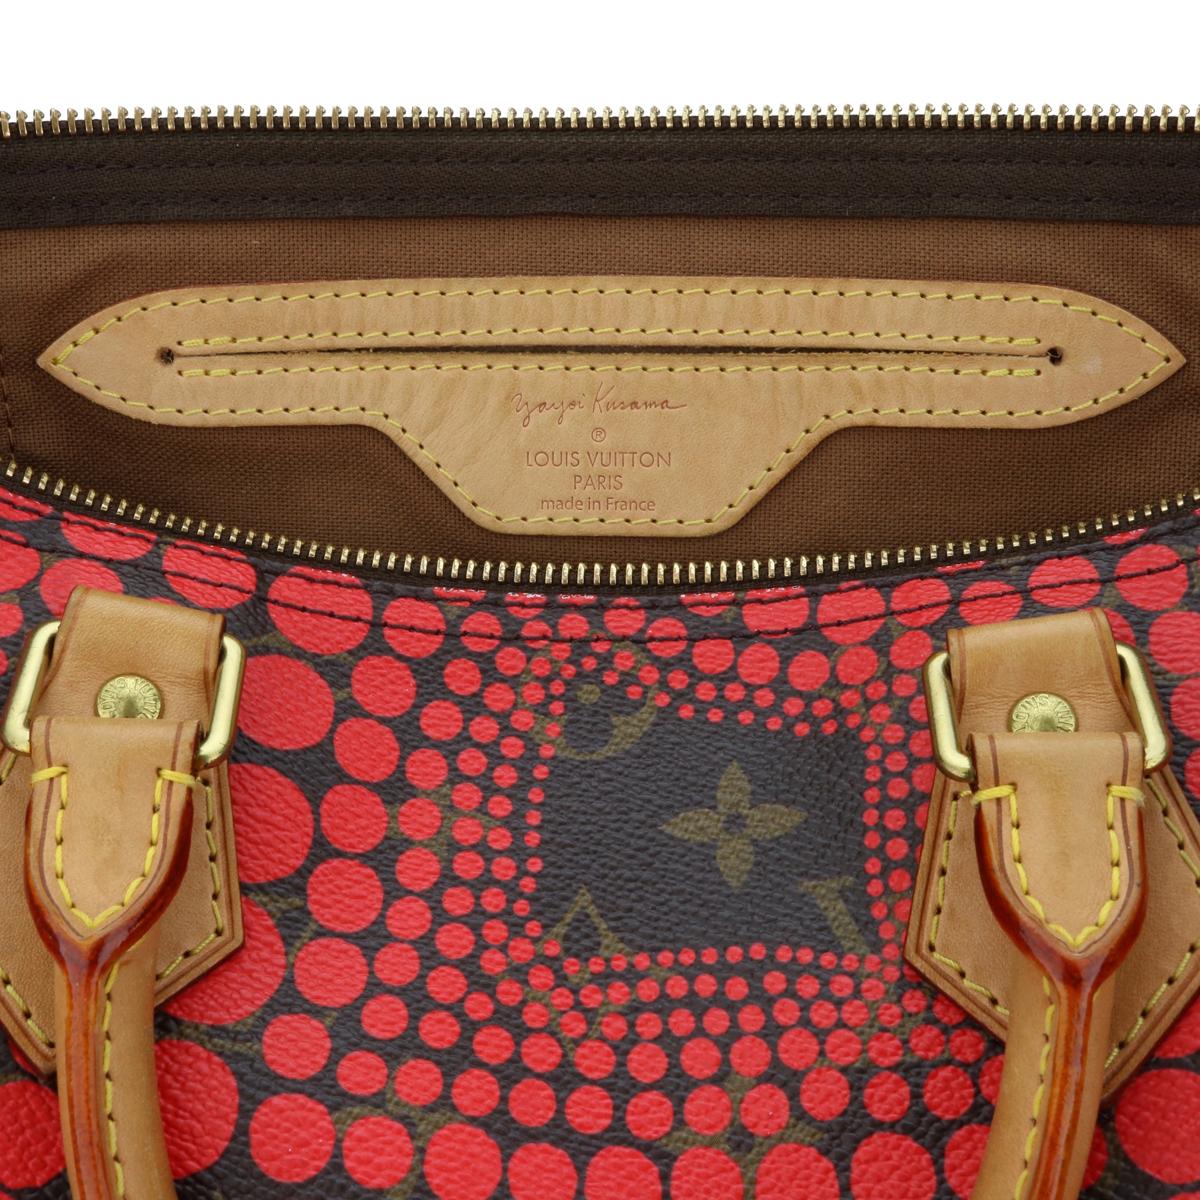 Louis Vuitton Speedy 30 Bag Yayoi Kusama Monogram in Red Limited Edition 2012 11